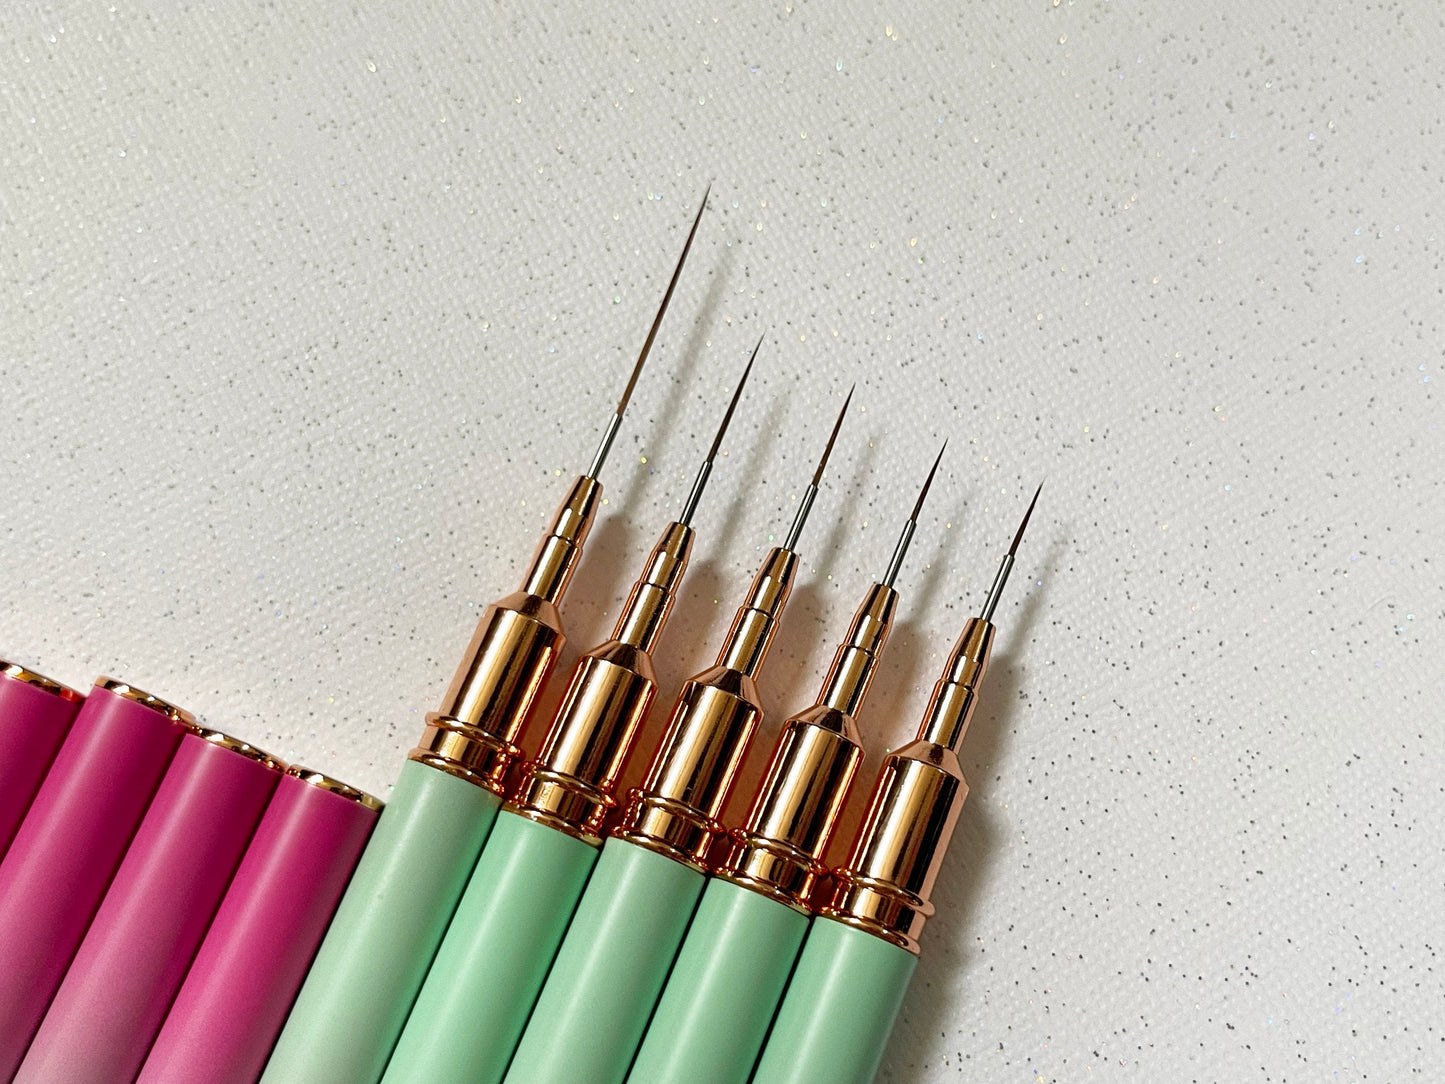 20mm Pink Nail Brush Detailing Striping Nail Art Pen